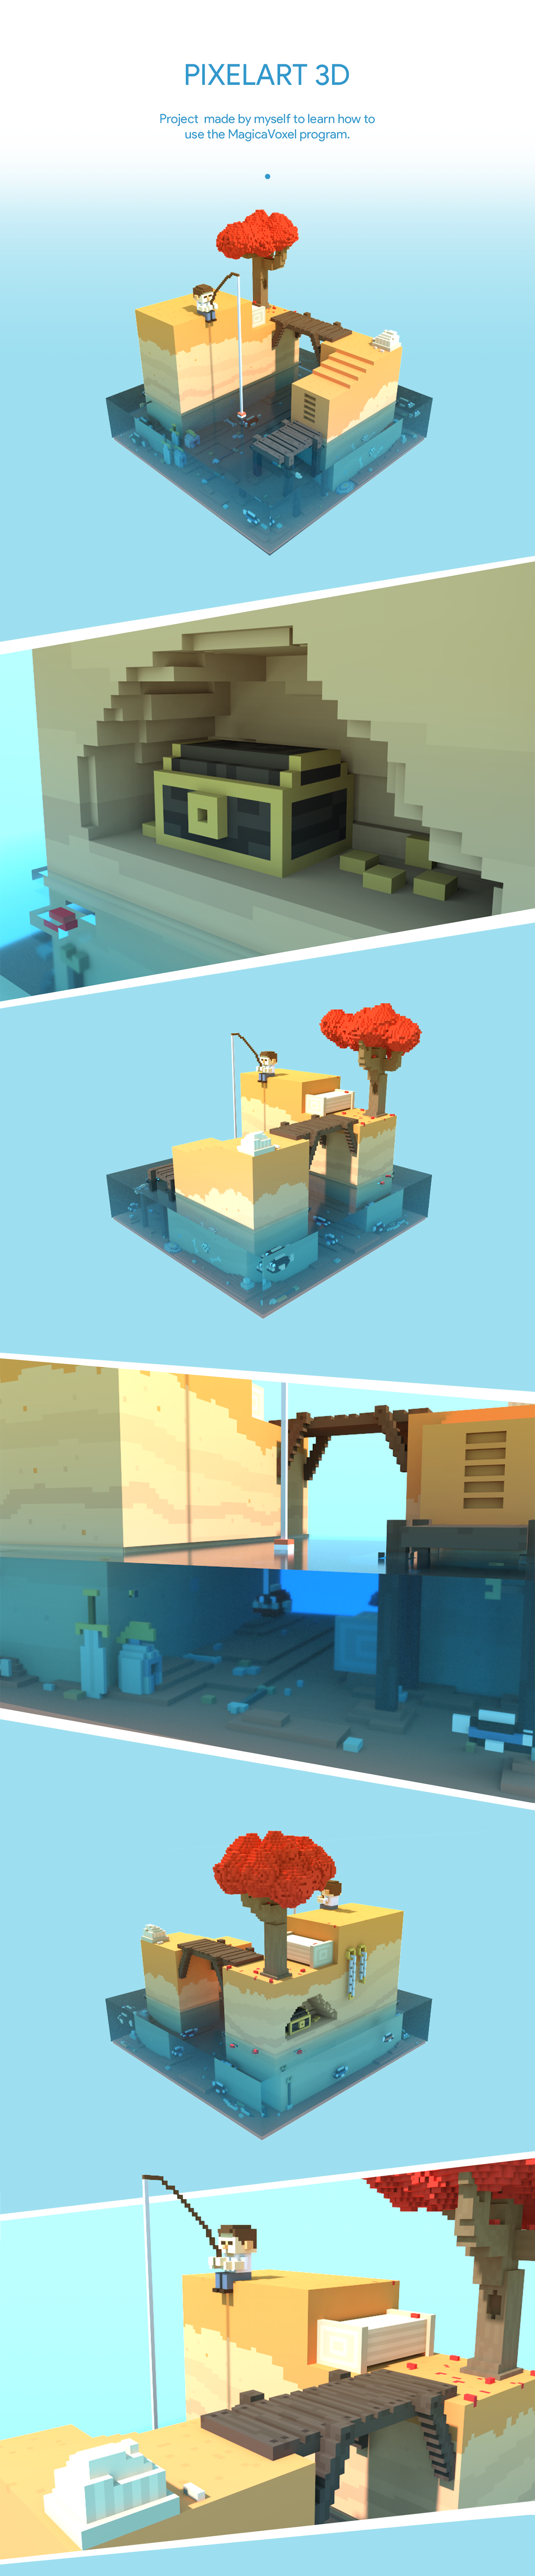 pixelart 3D Fisherman pixel art illustartion game background concept cube